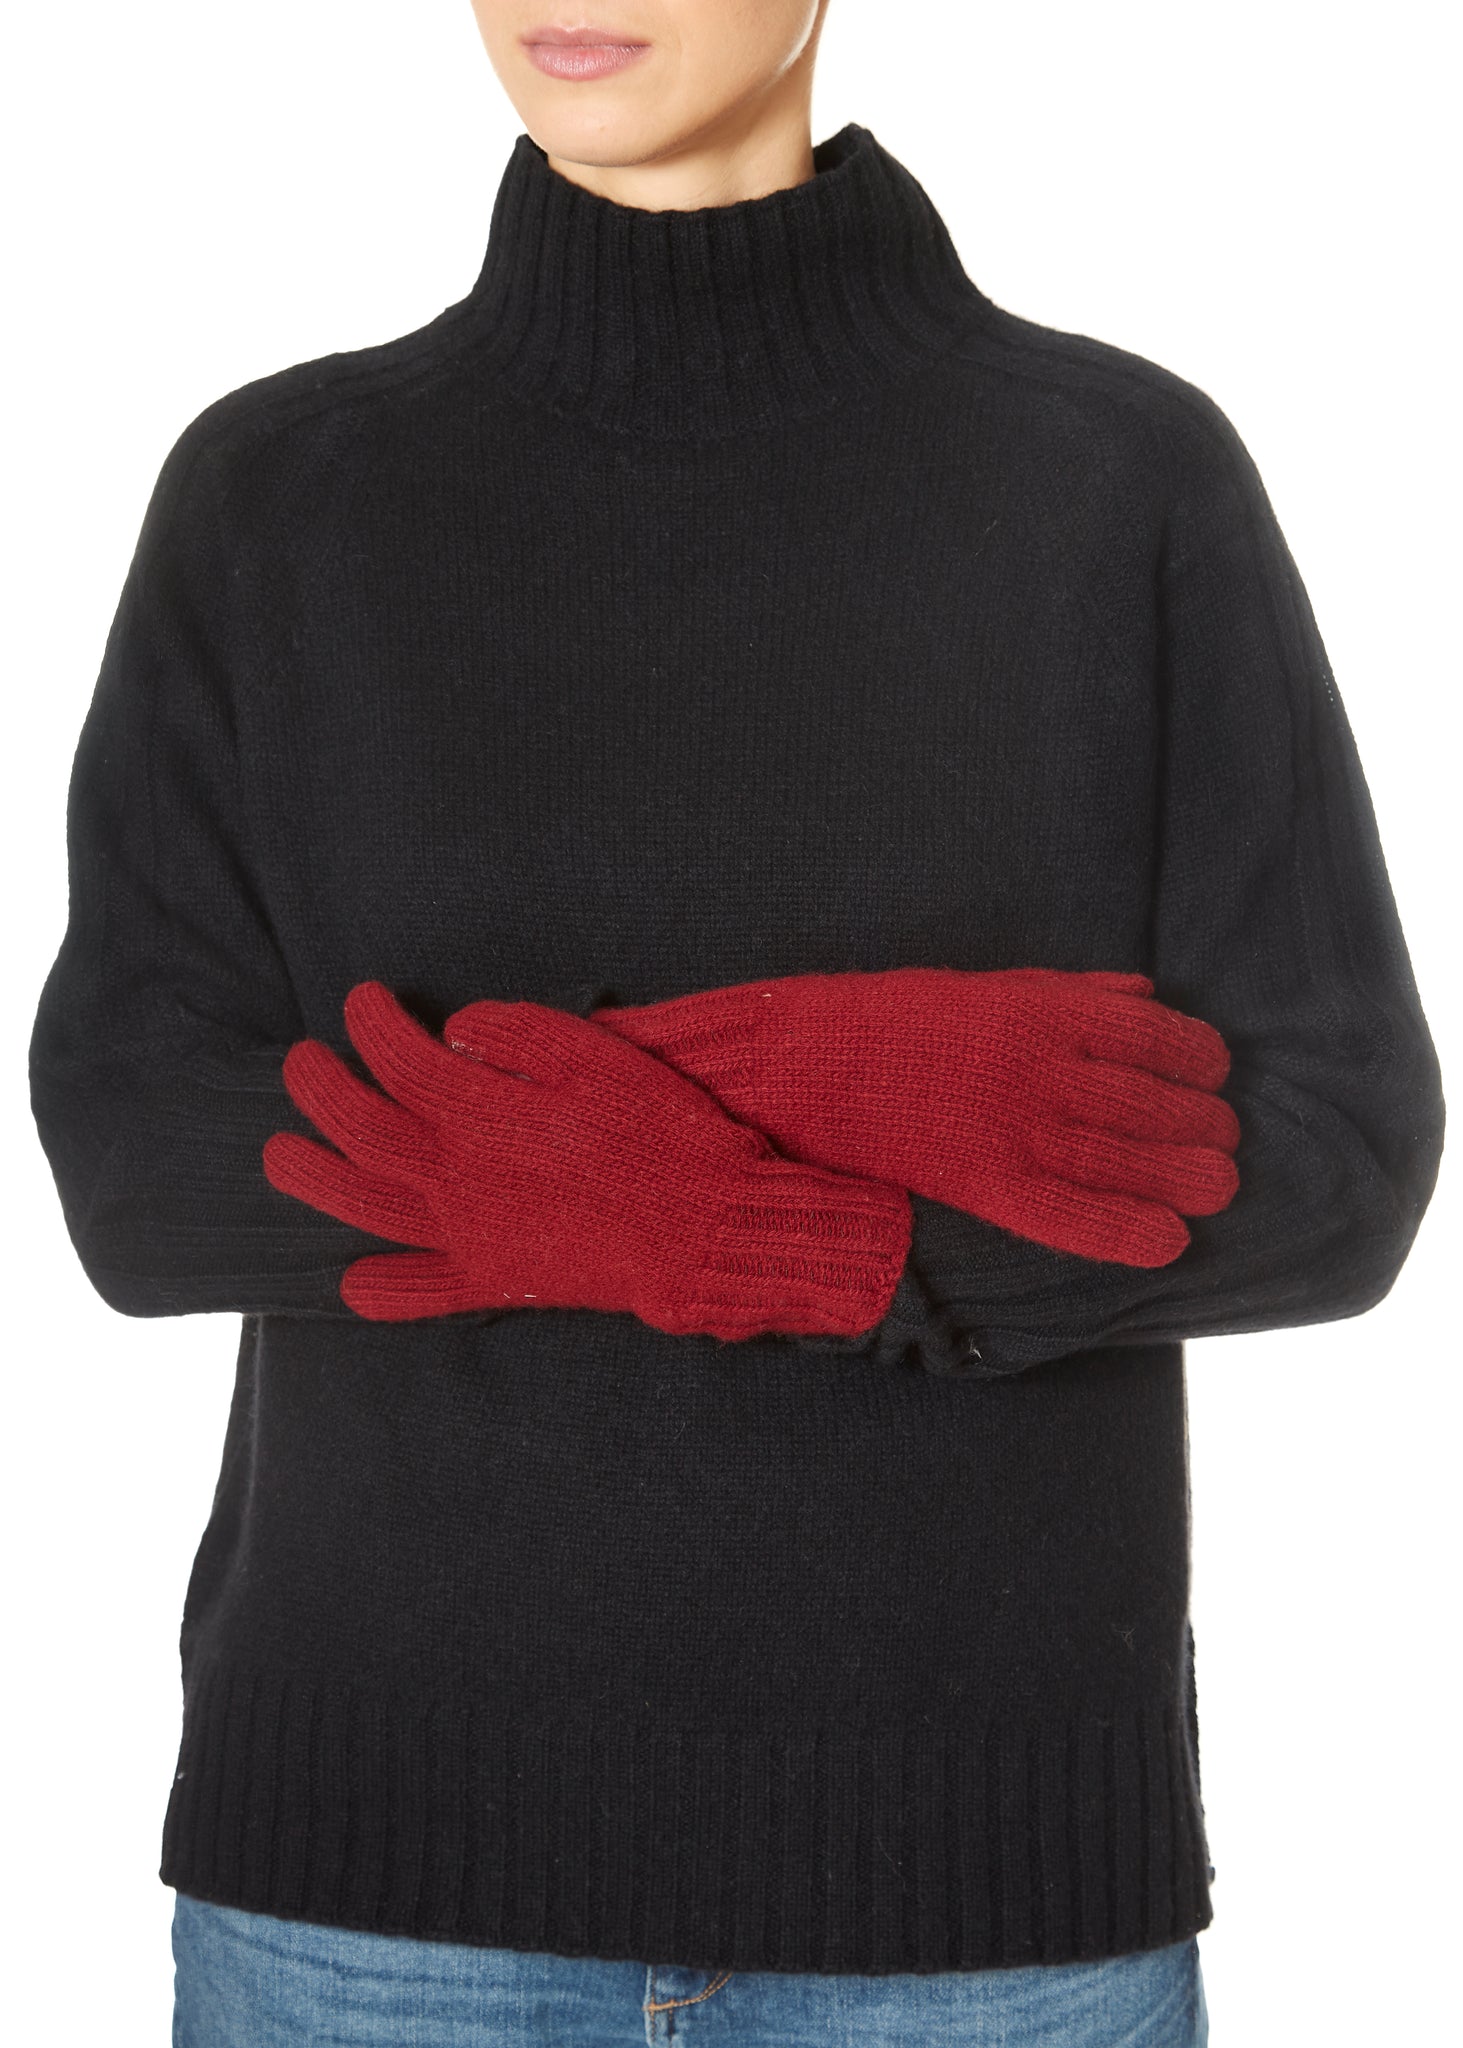 Santacana Burgundy Gloves 'Cashmere Blend' - Jessimara